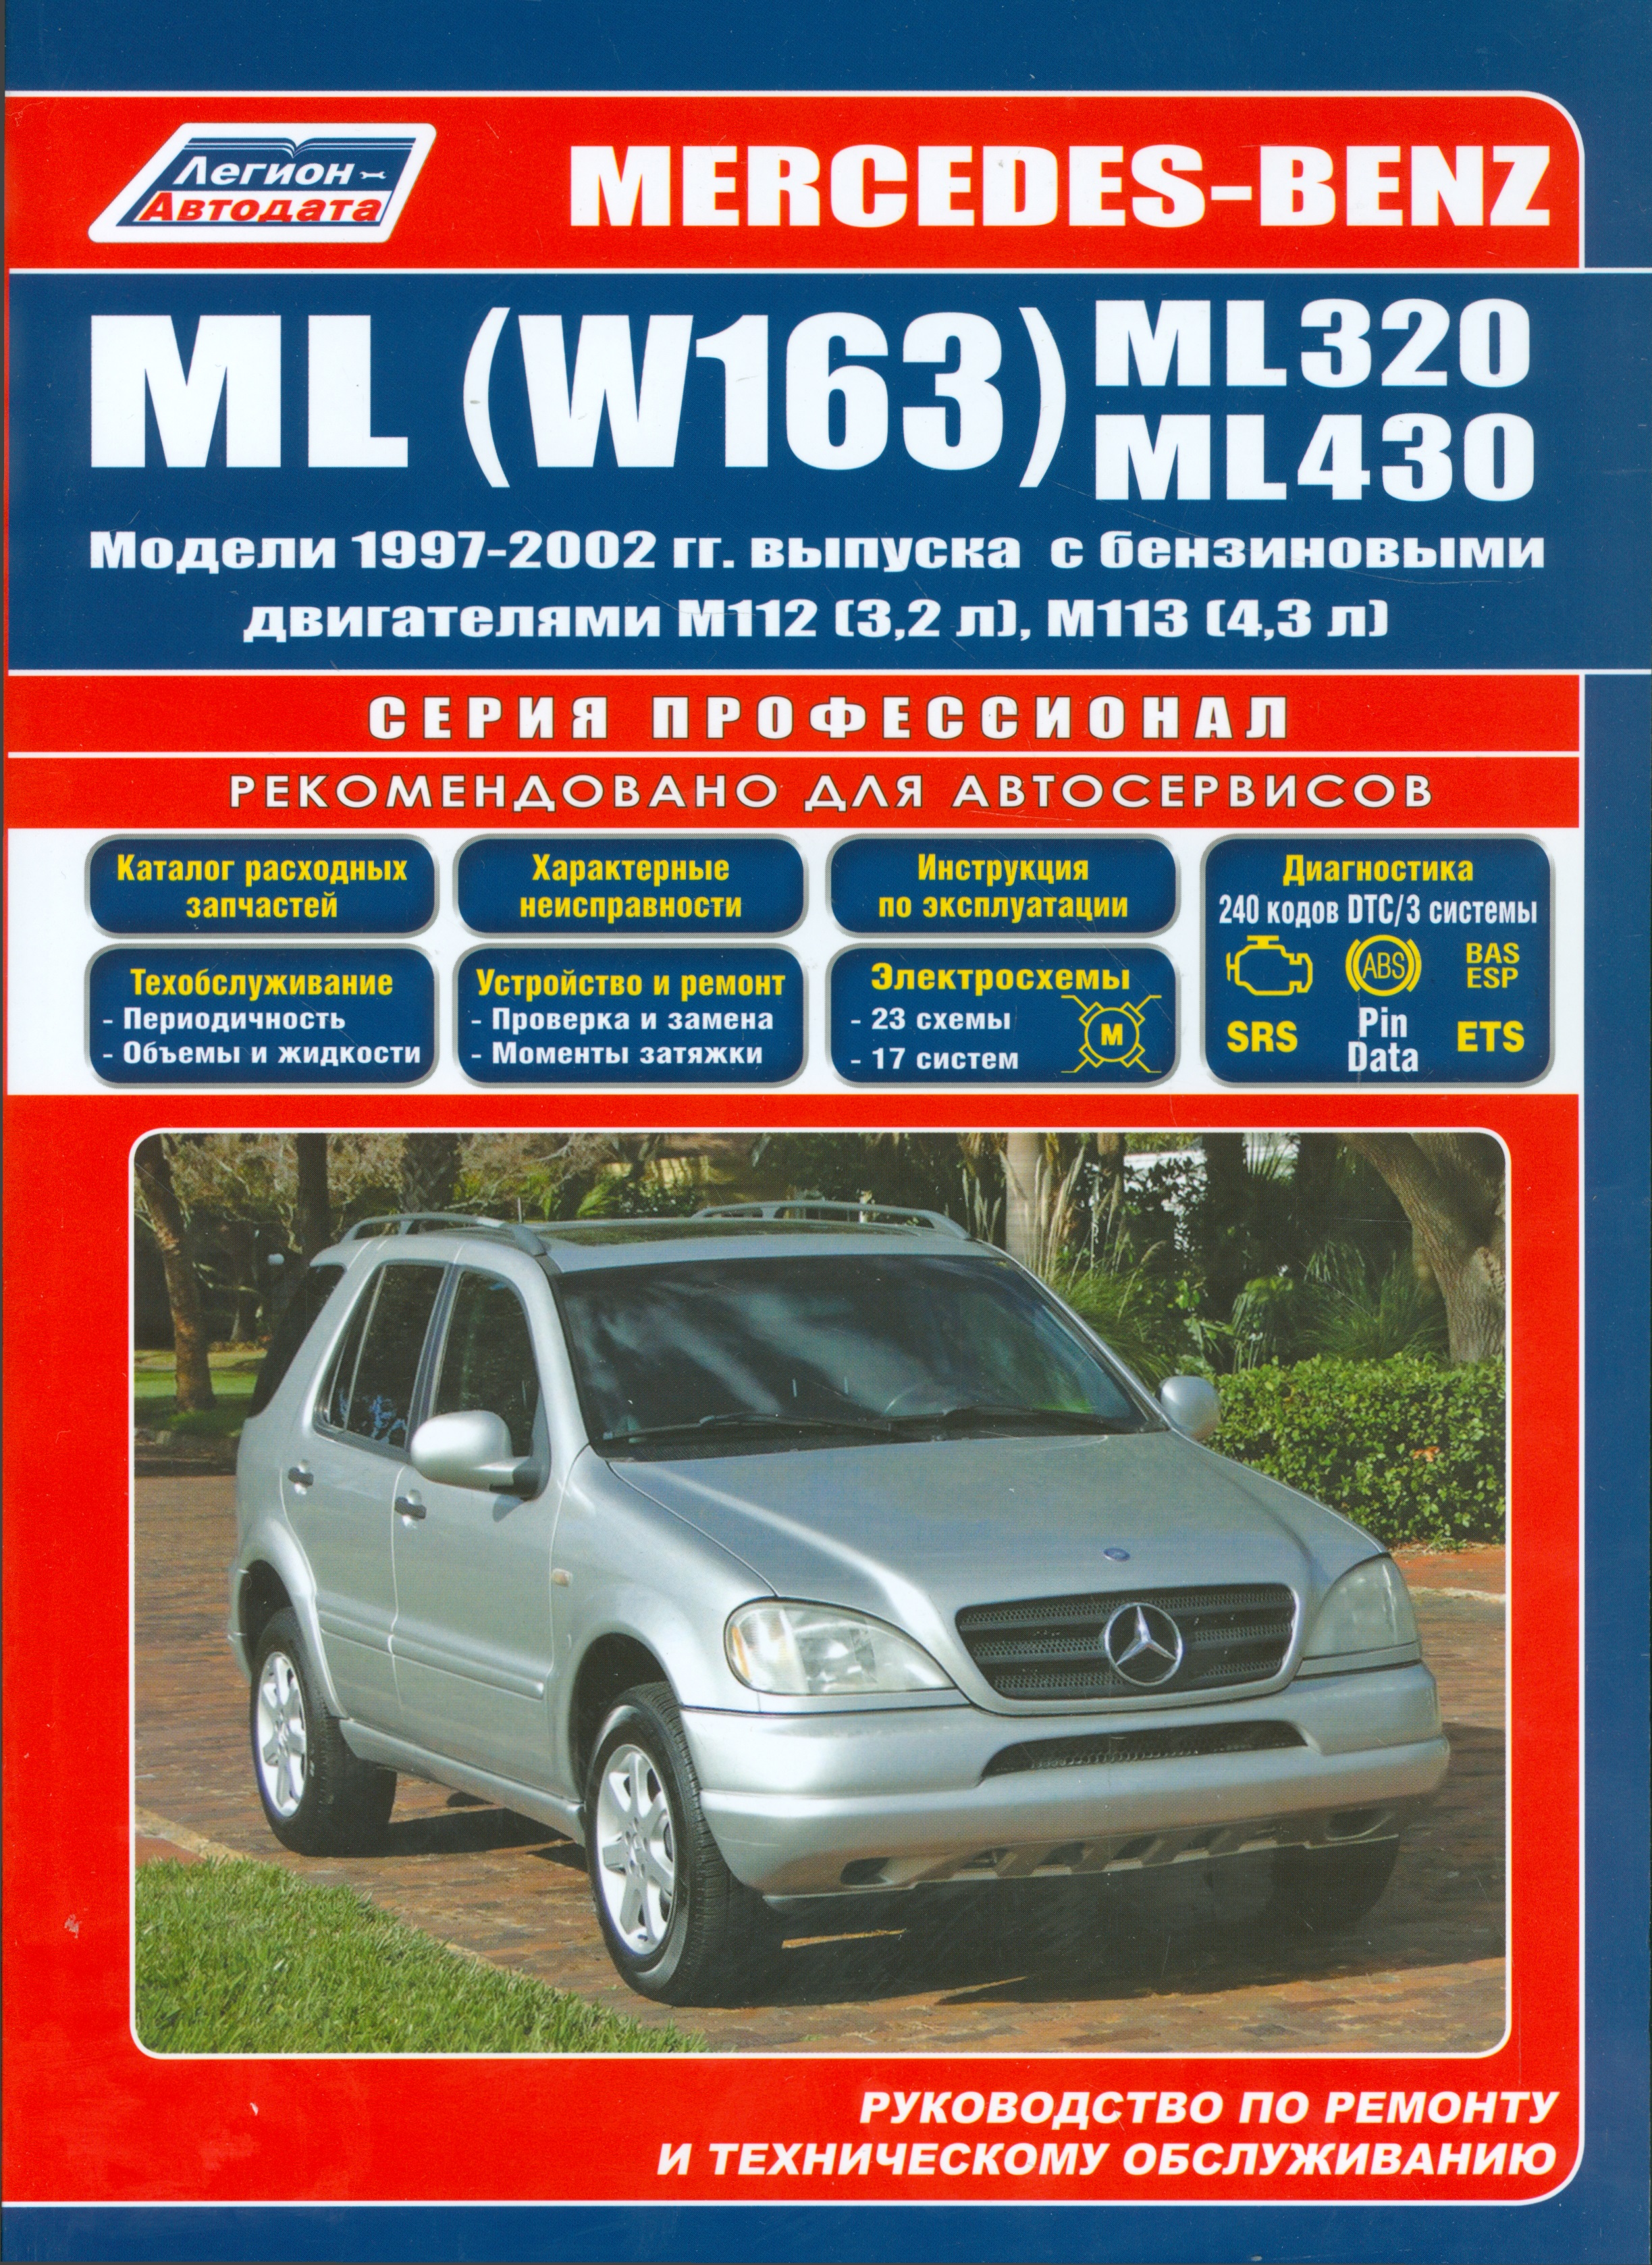 Mercedes-Benz ML (W163) ML320 ML430 Мод. 1997-2002 гг. вып. С бенз. (мПрофессионал) автозапчасти 1633330001 bbmart 1 шт передний левый верхний рычаг управления для mercedes benz w163 98 2003 ml320 oe a1633330001